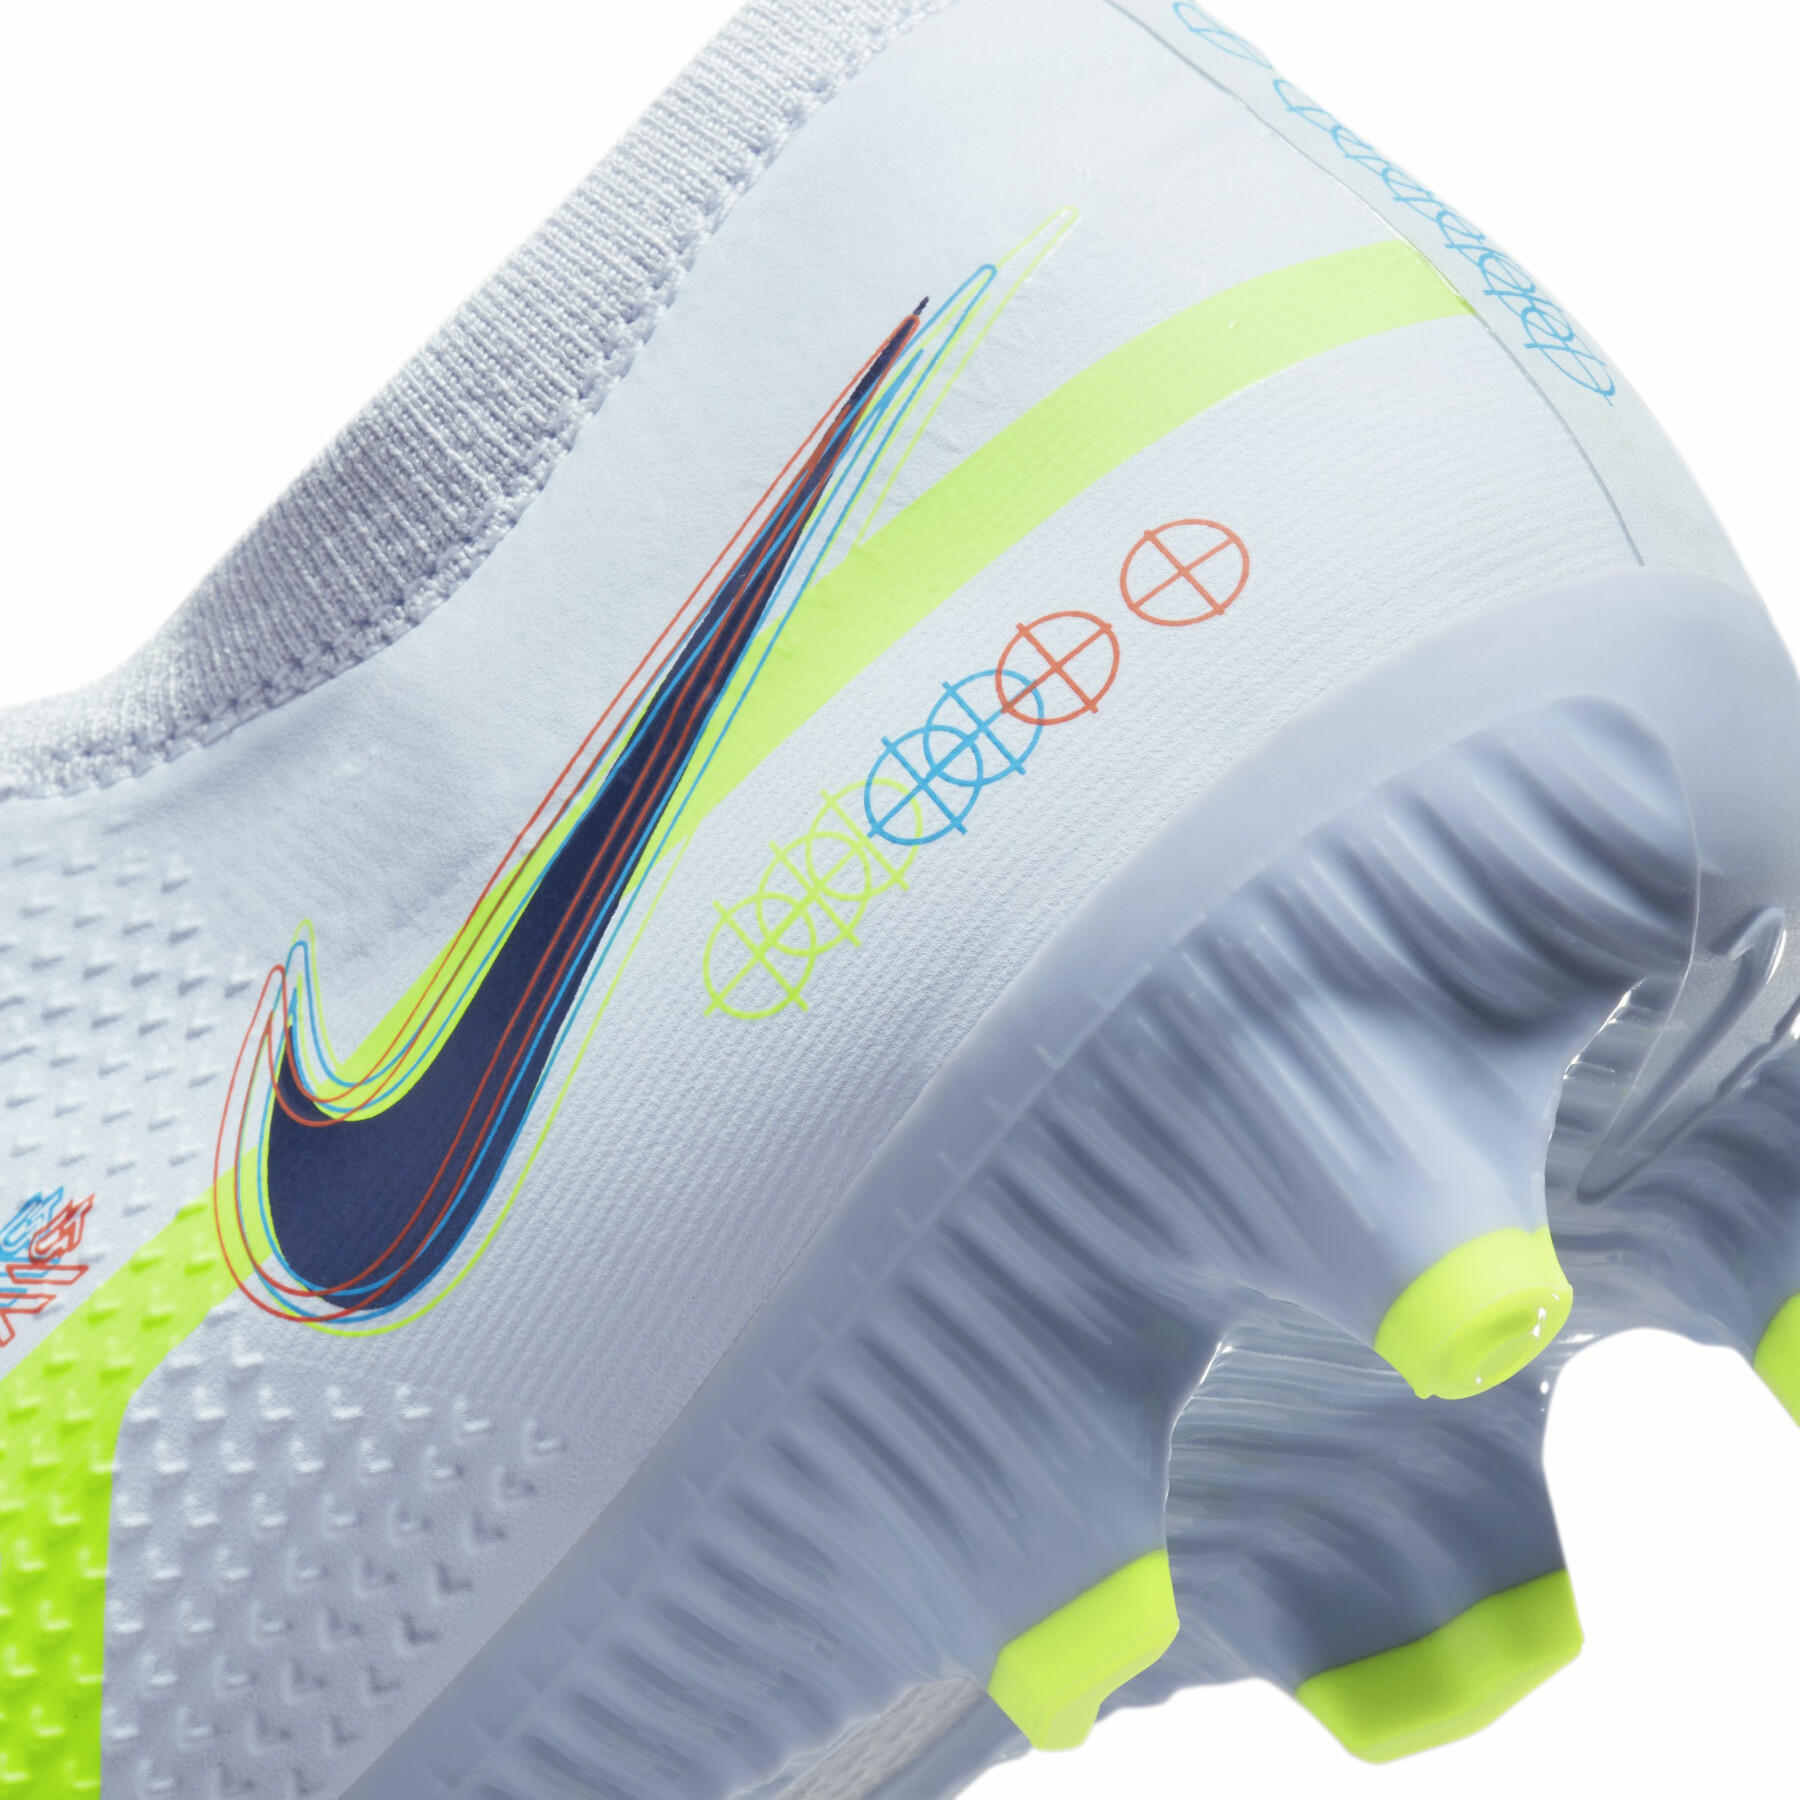 Soccer shoes Nike Phantom Gt2 Pro FG